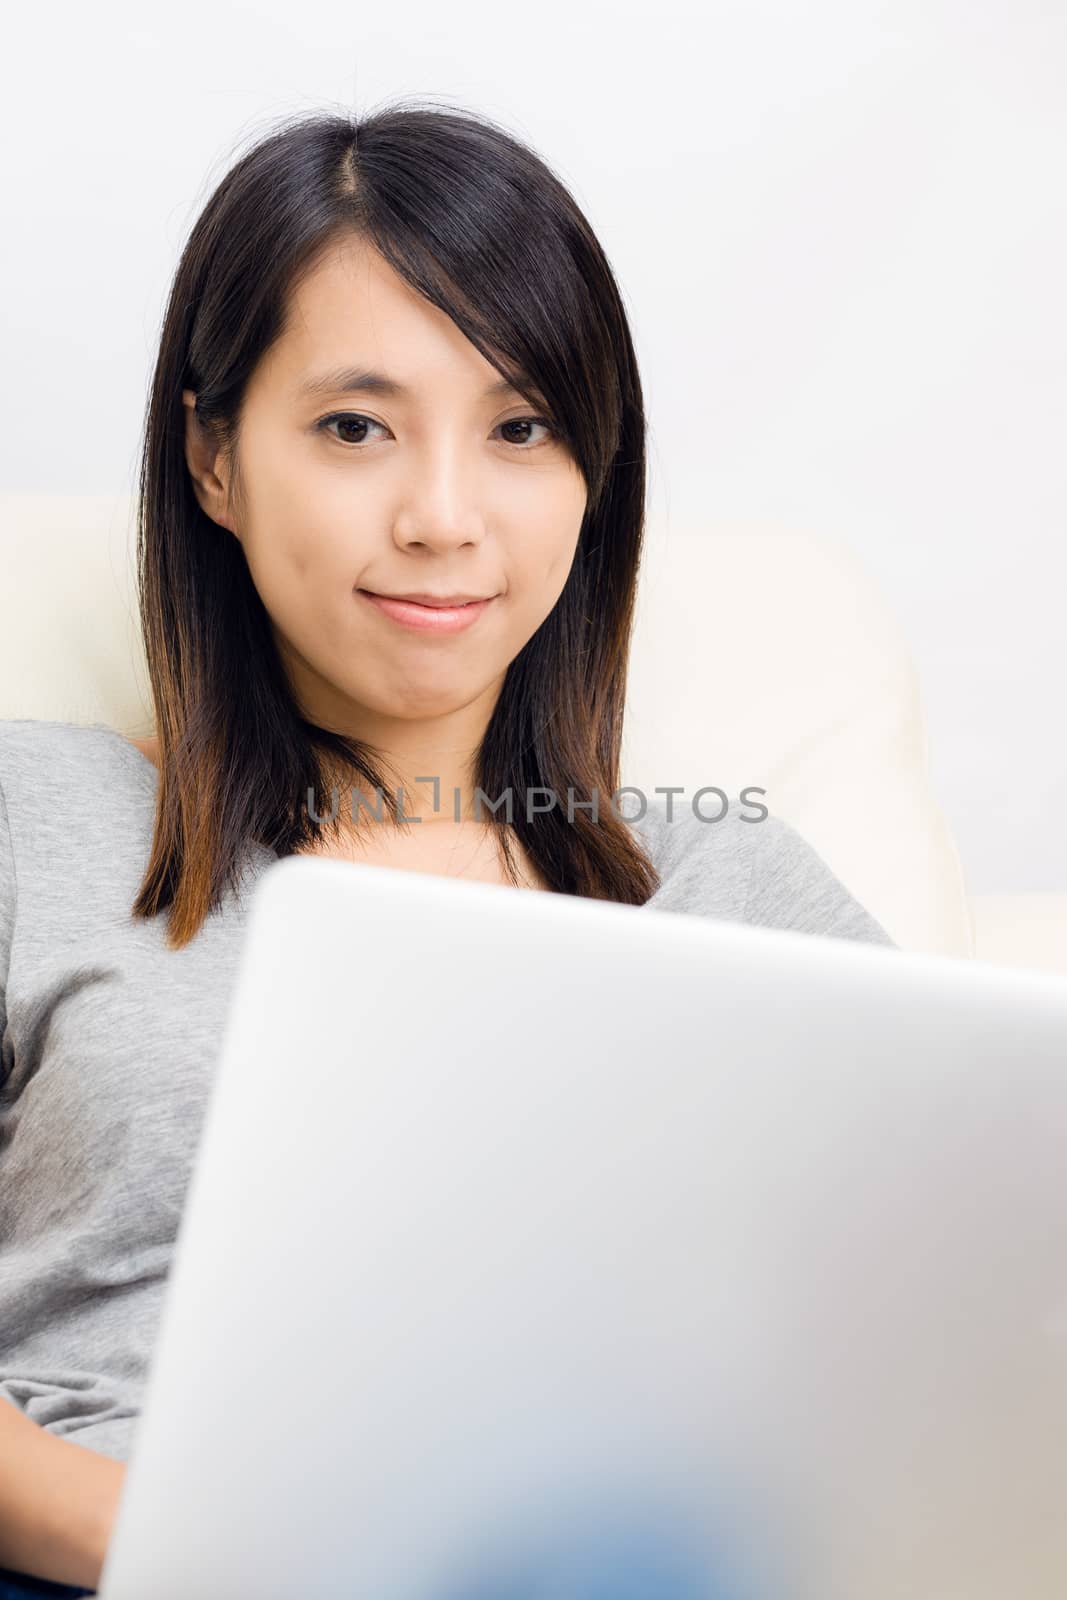 Asian woman using laptop